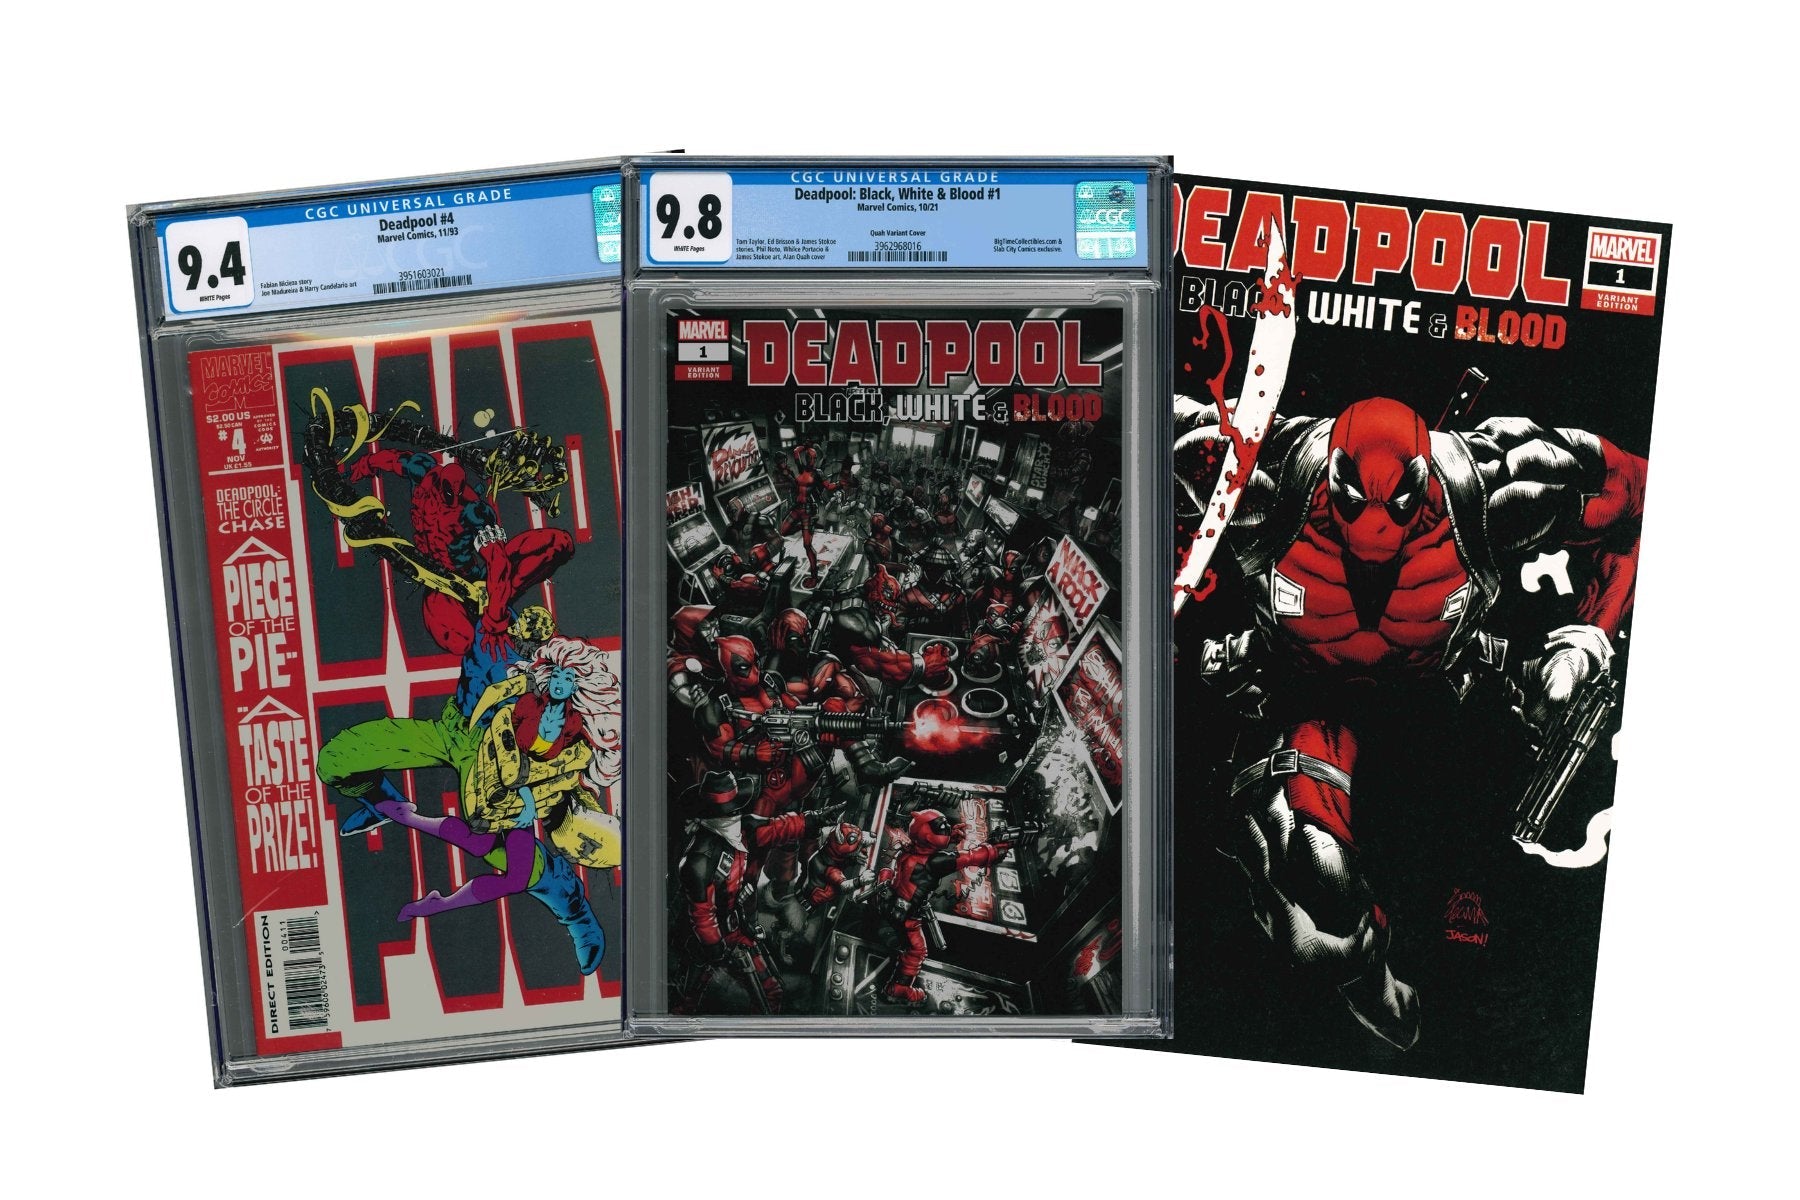 Über 20 Deadpool Comics, Black, White & Blood